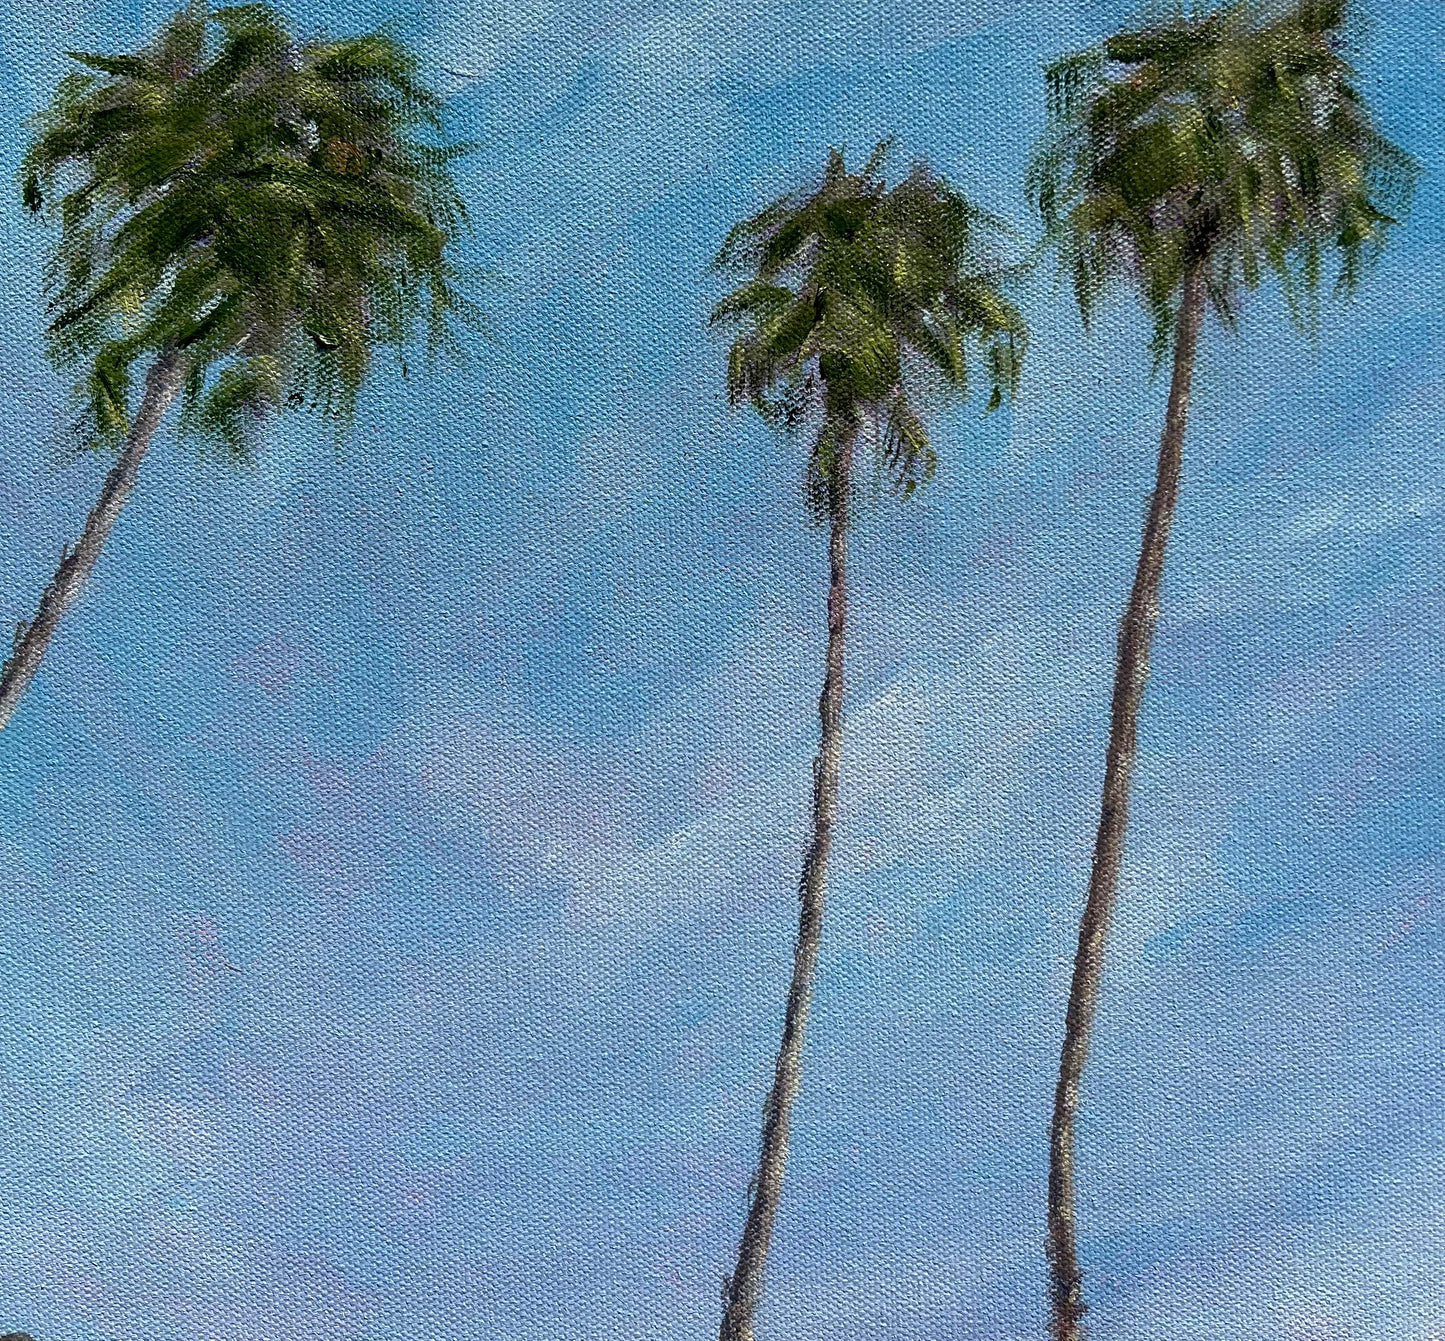 Hendry's Beach, Santa Barbara -Original Painting by Kirsten Hagen